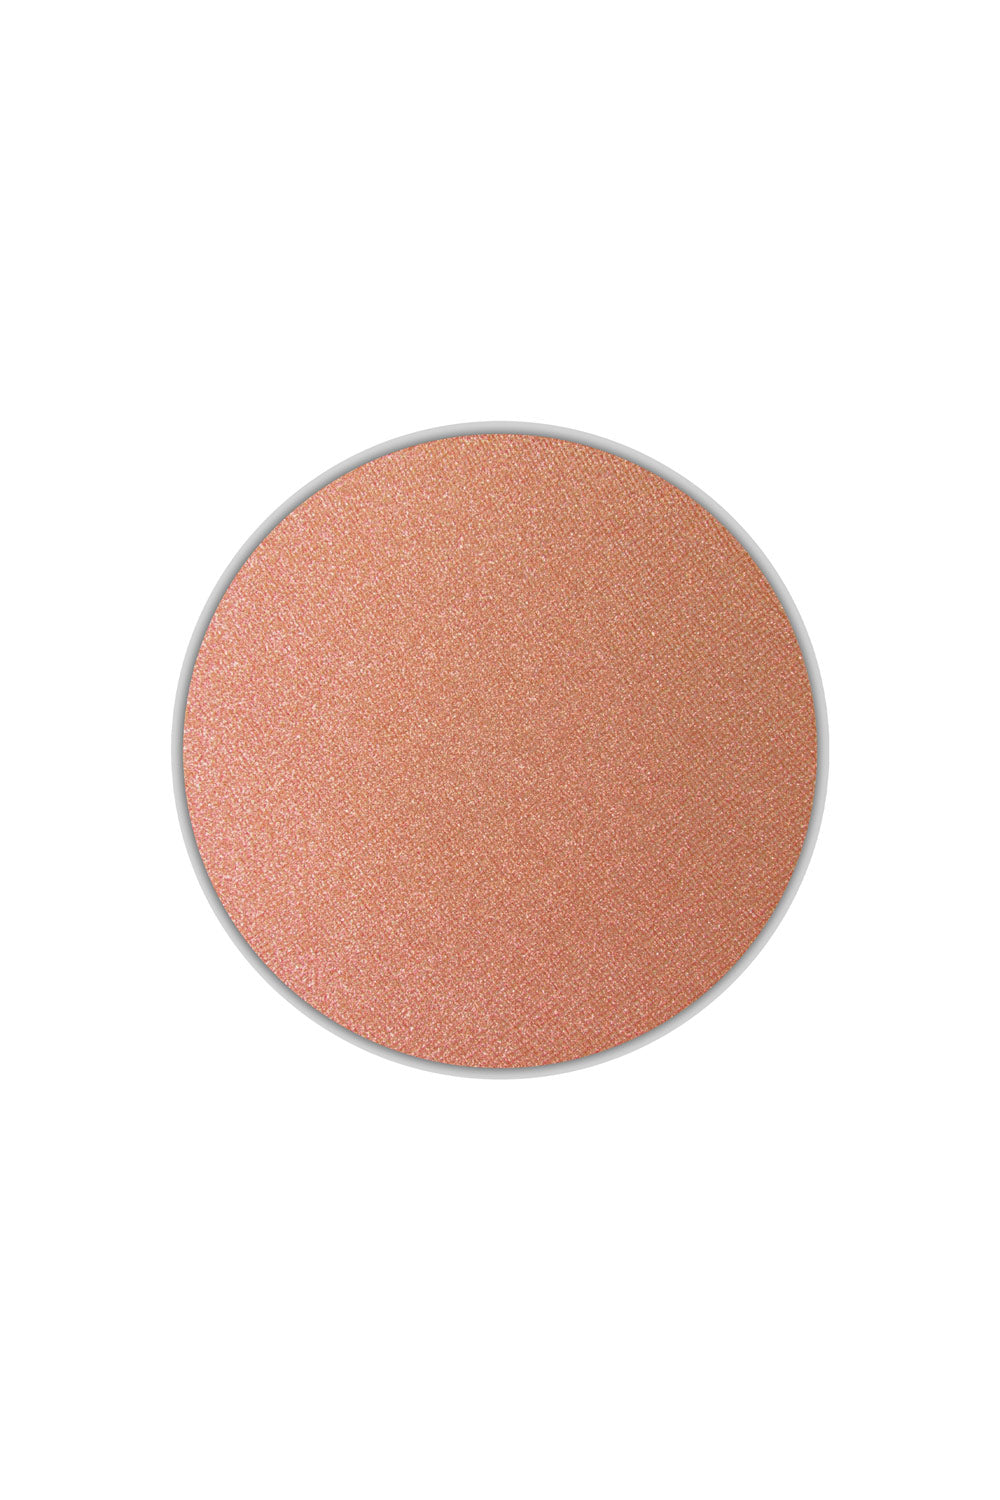 Copper Penny - Type 3 Eyeshadow Pan